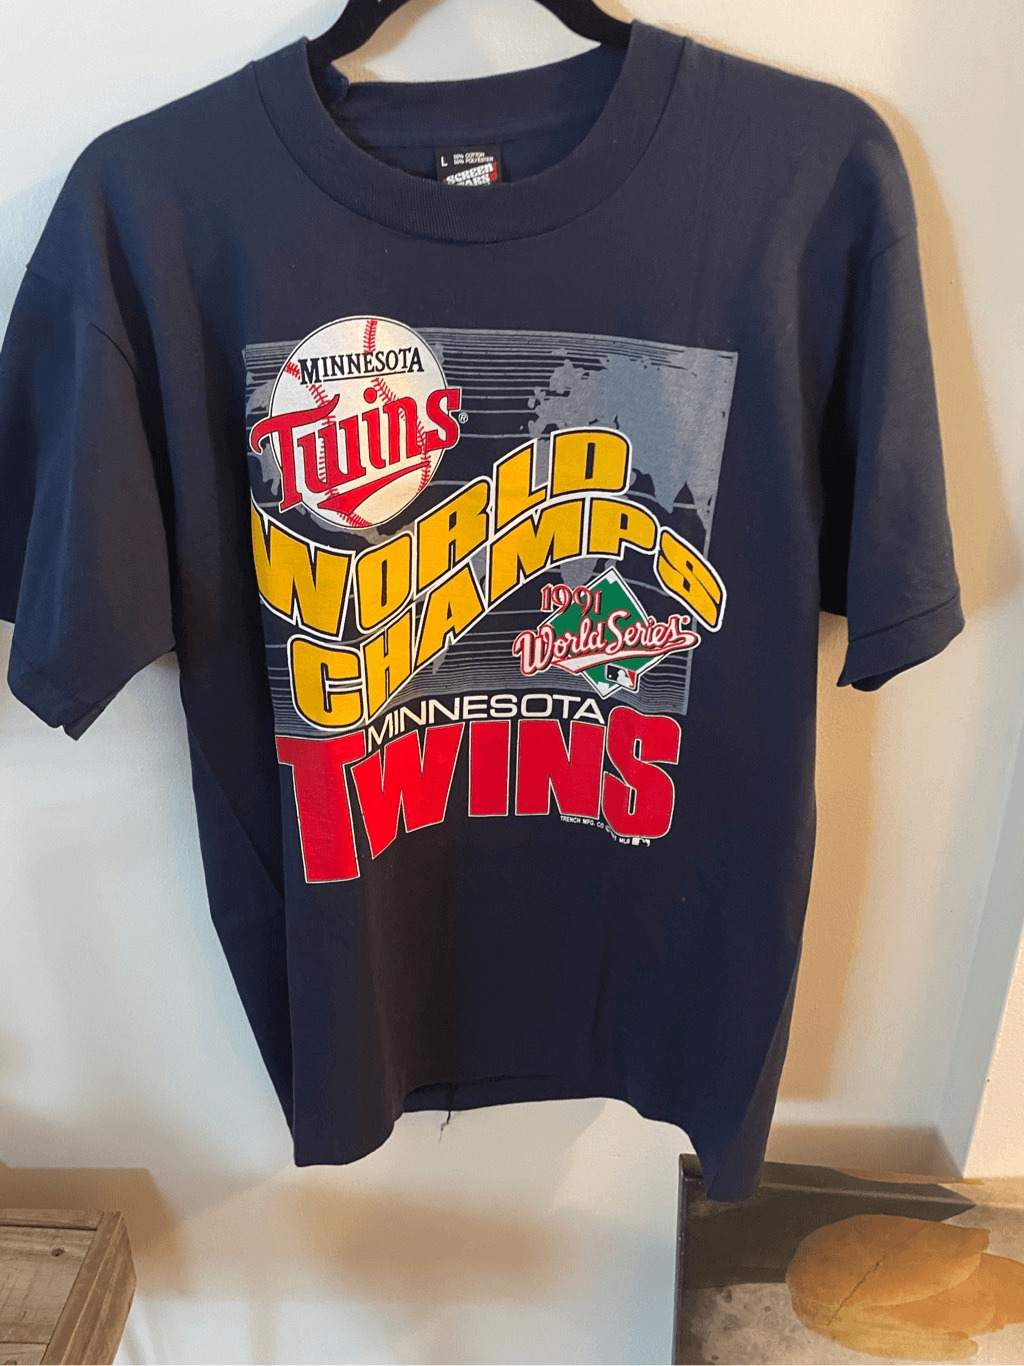 Vintage Minnesota Twins 1991 World Series T-Shirt - image 1